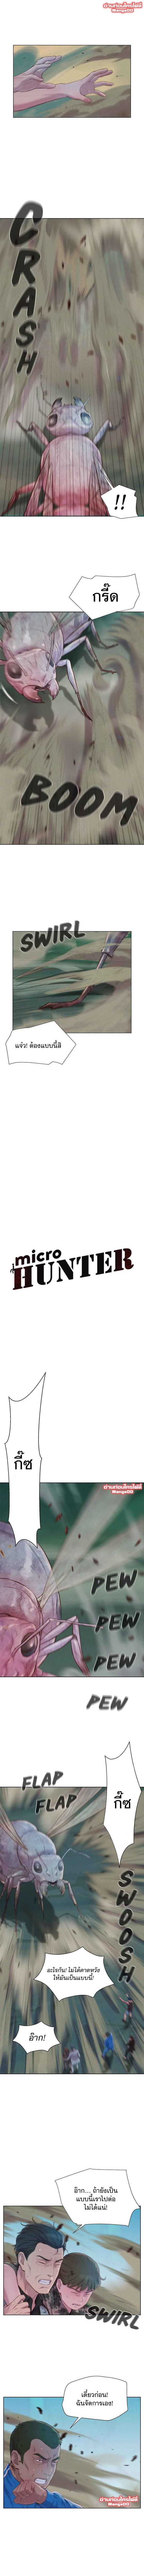 3CM Hunter 66 01